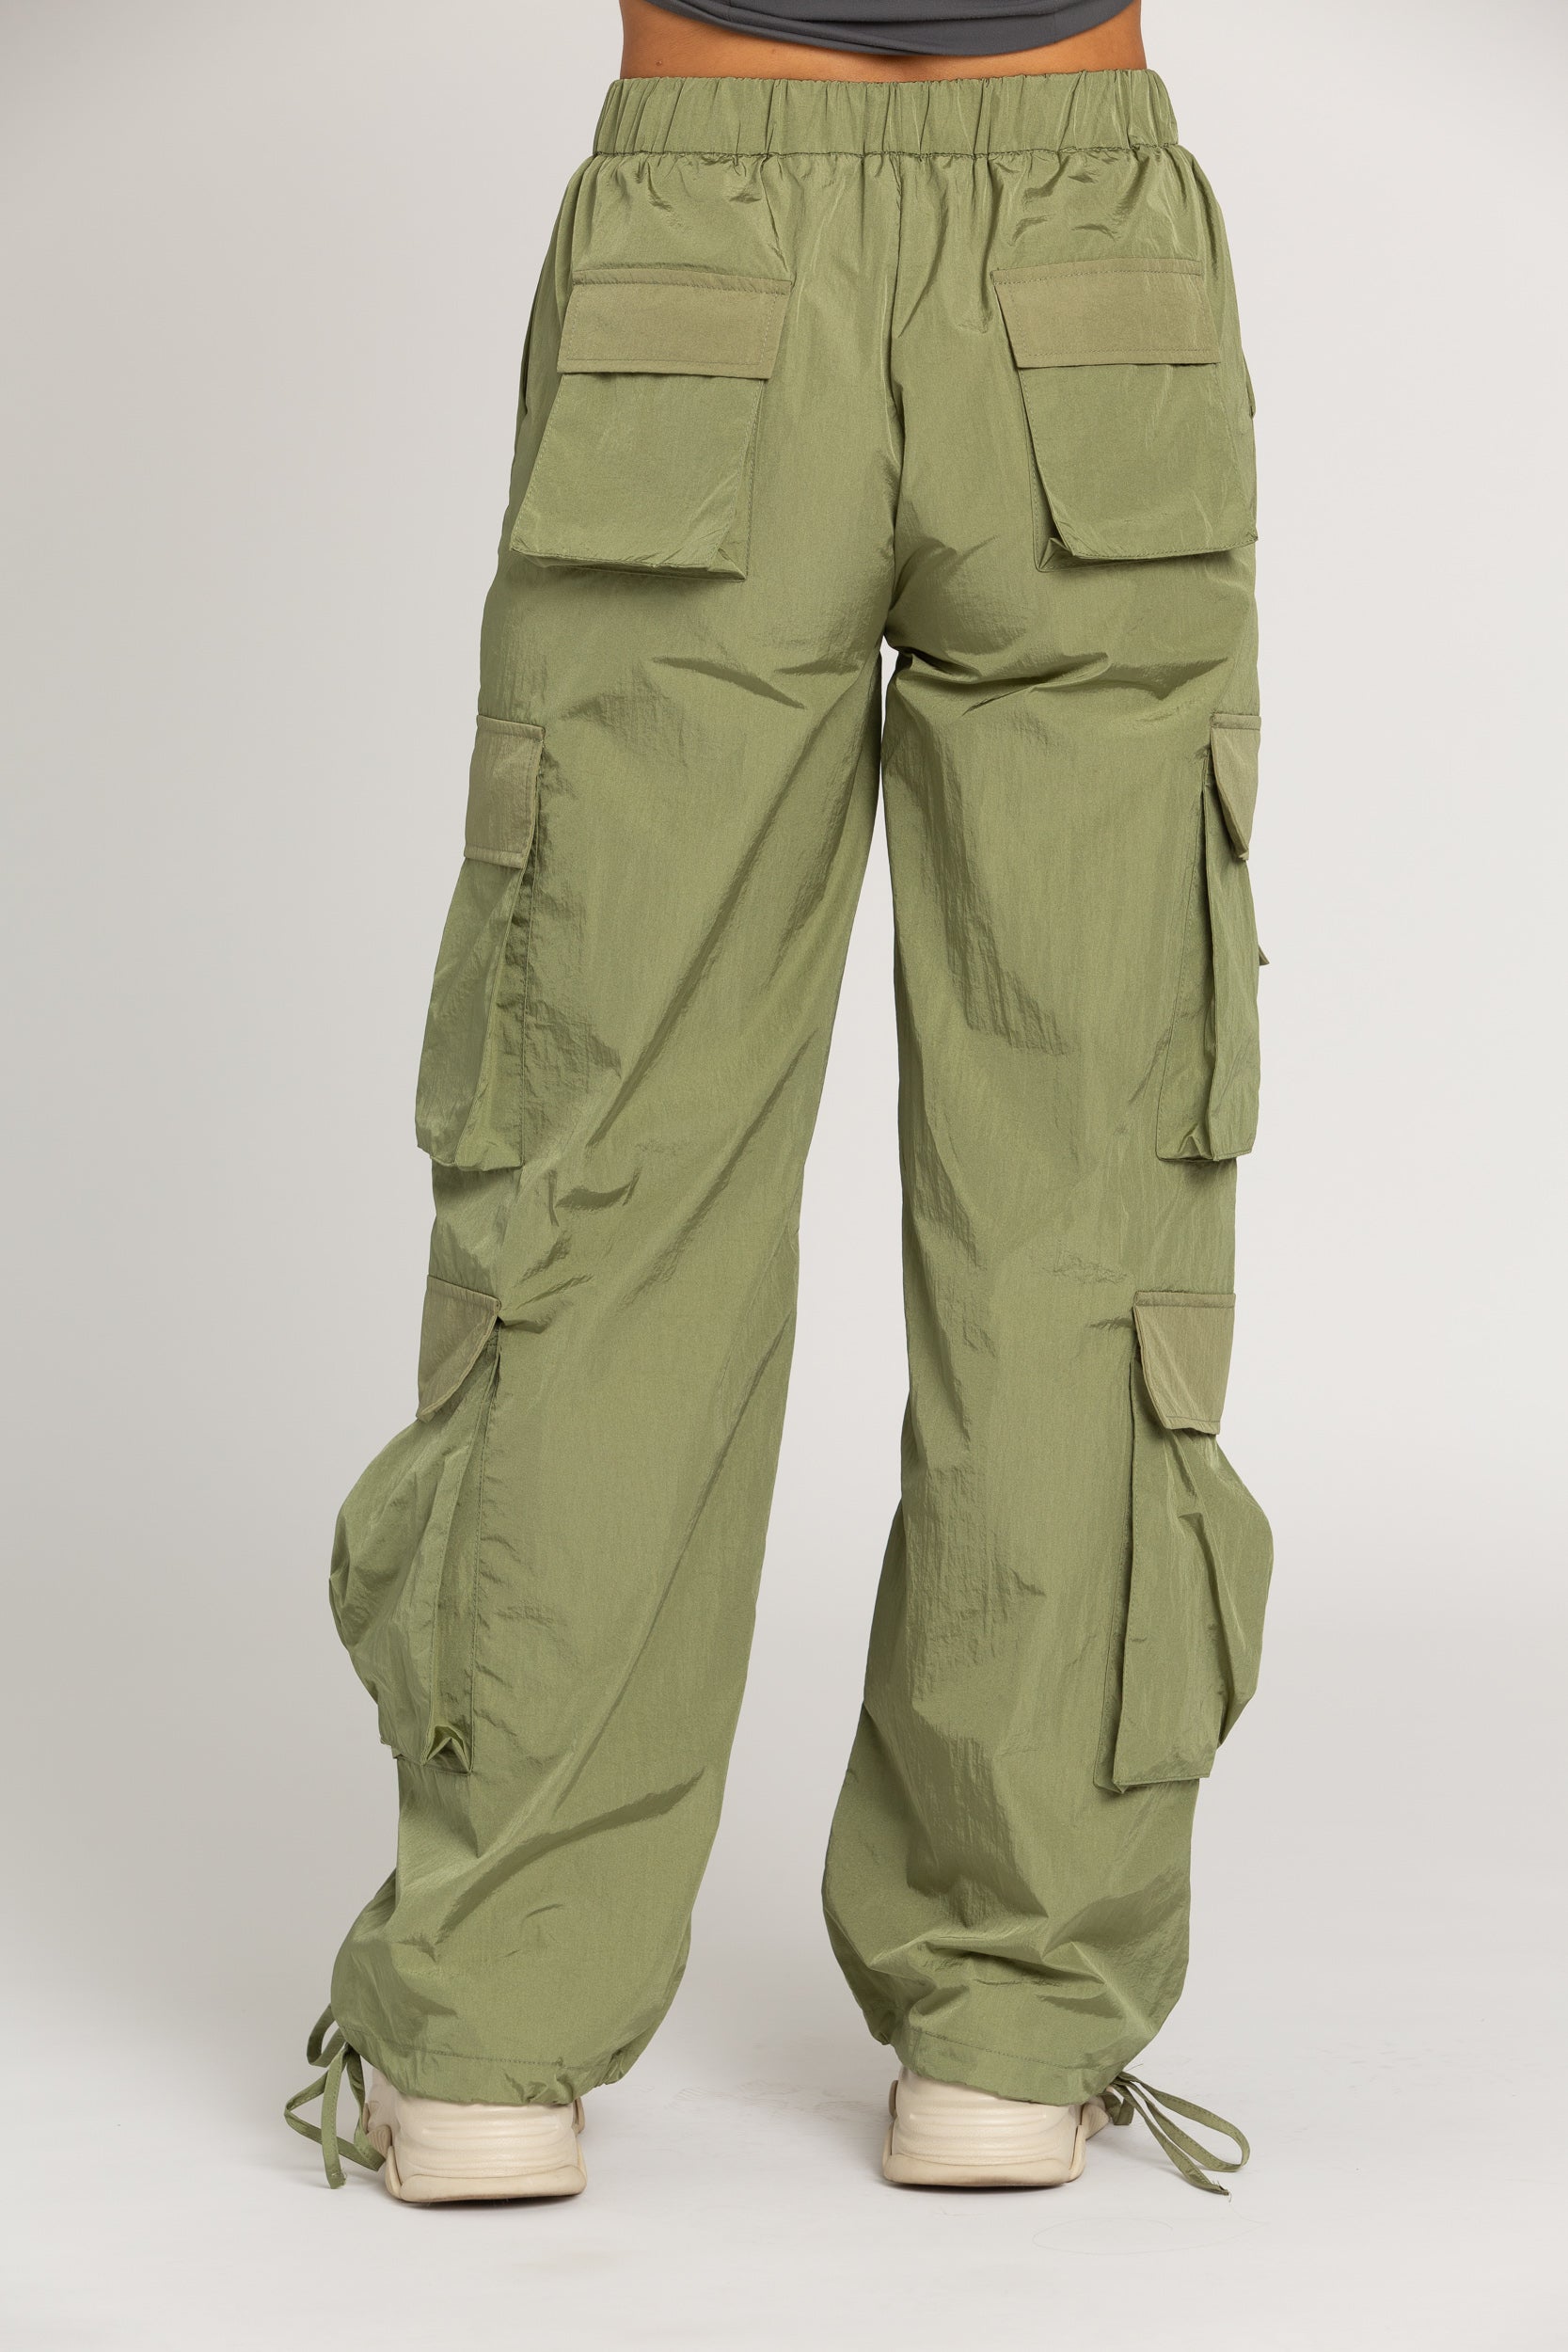 Shiny Olive Green Parachute Pants